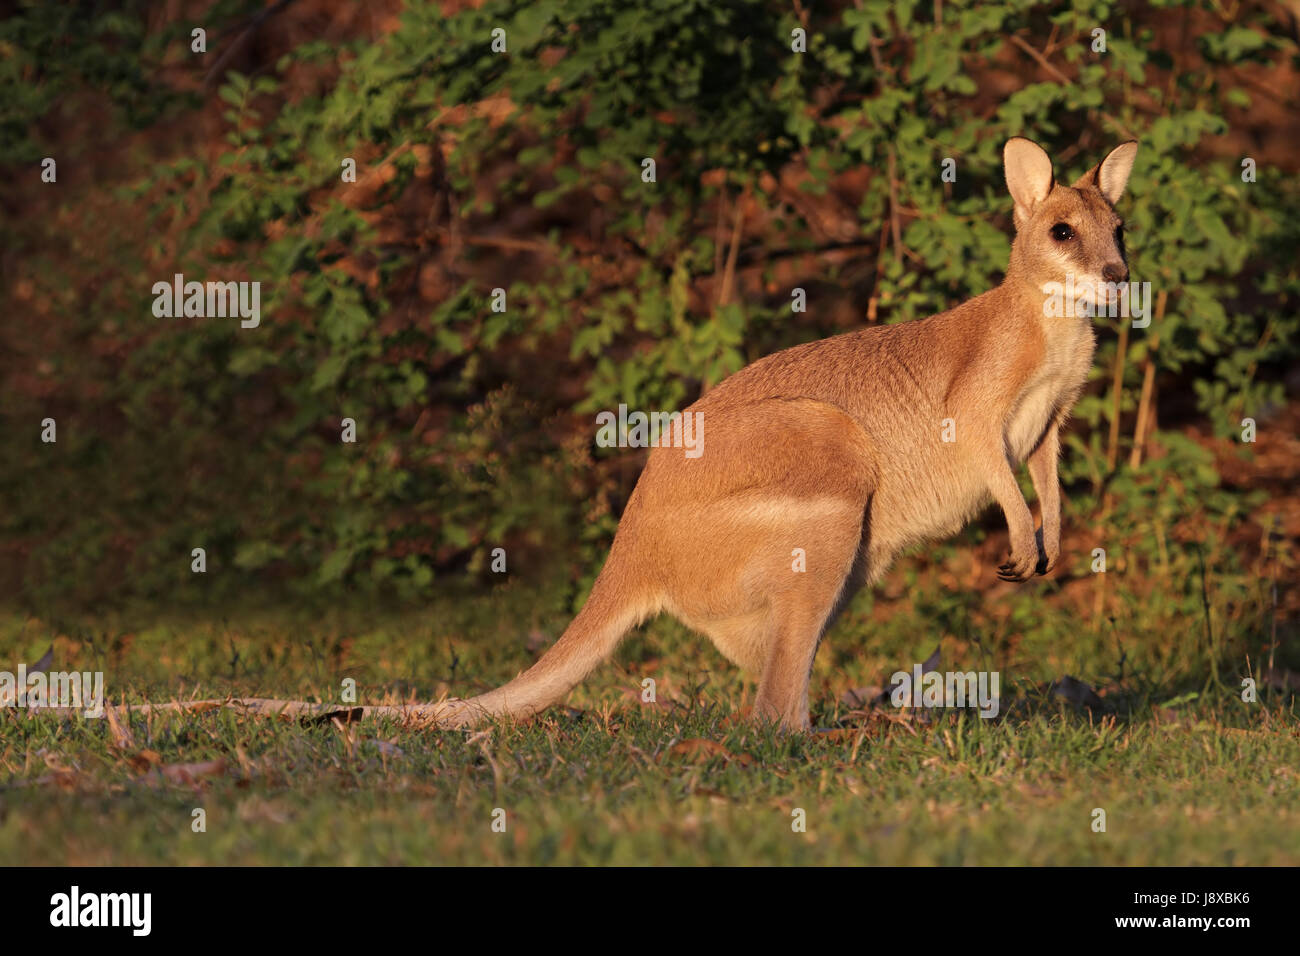 Animale, Australia, fauna selvatica, wallaby, agile, australiano, femmina, park, animale, Foto Stock